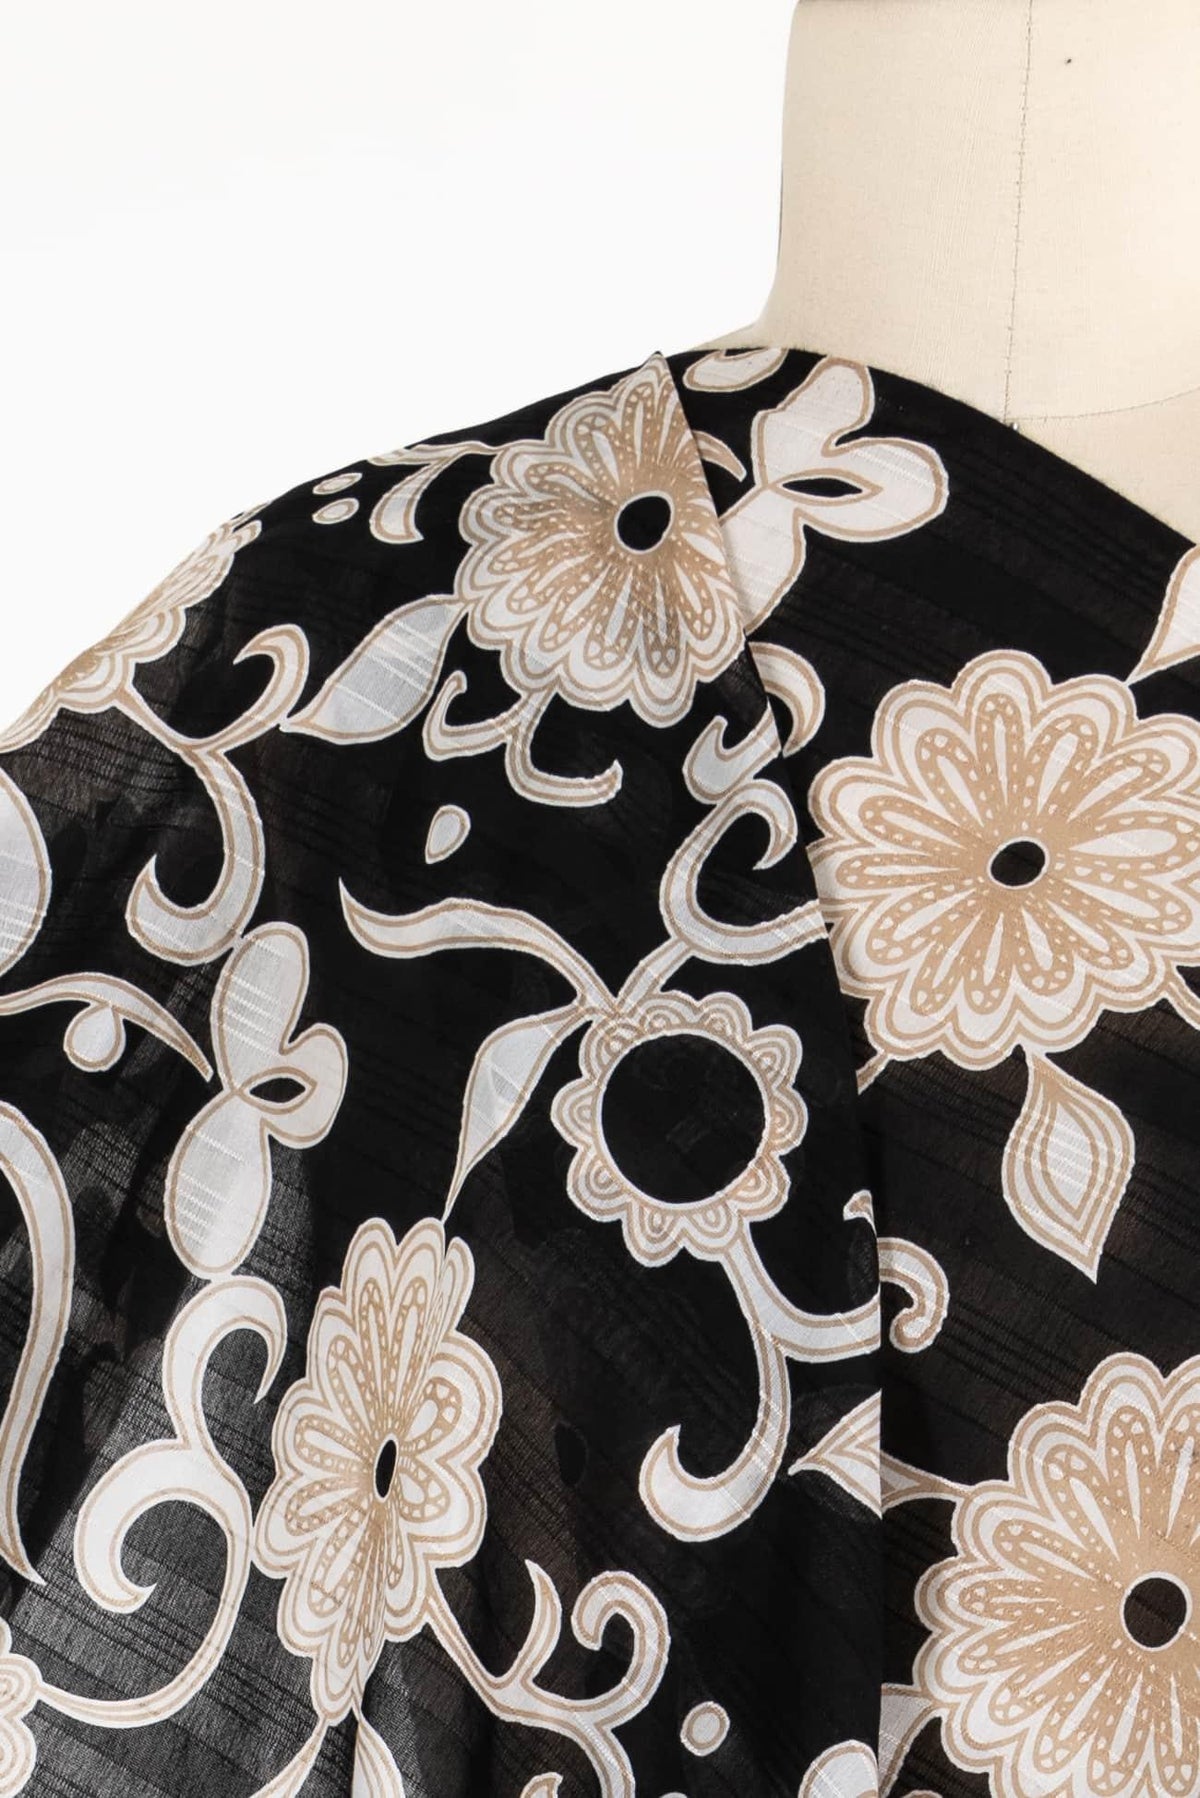 Blossom Dearie Cotton Woven - Marcy Tilton Fabrics